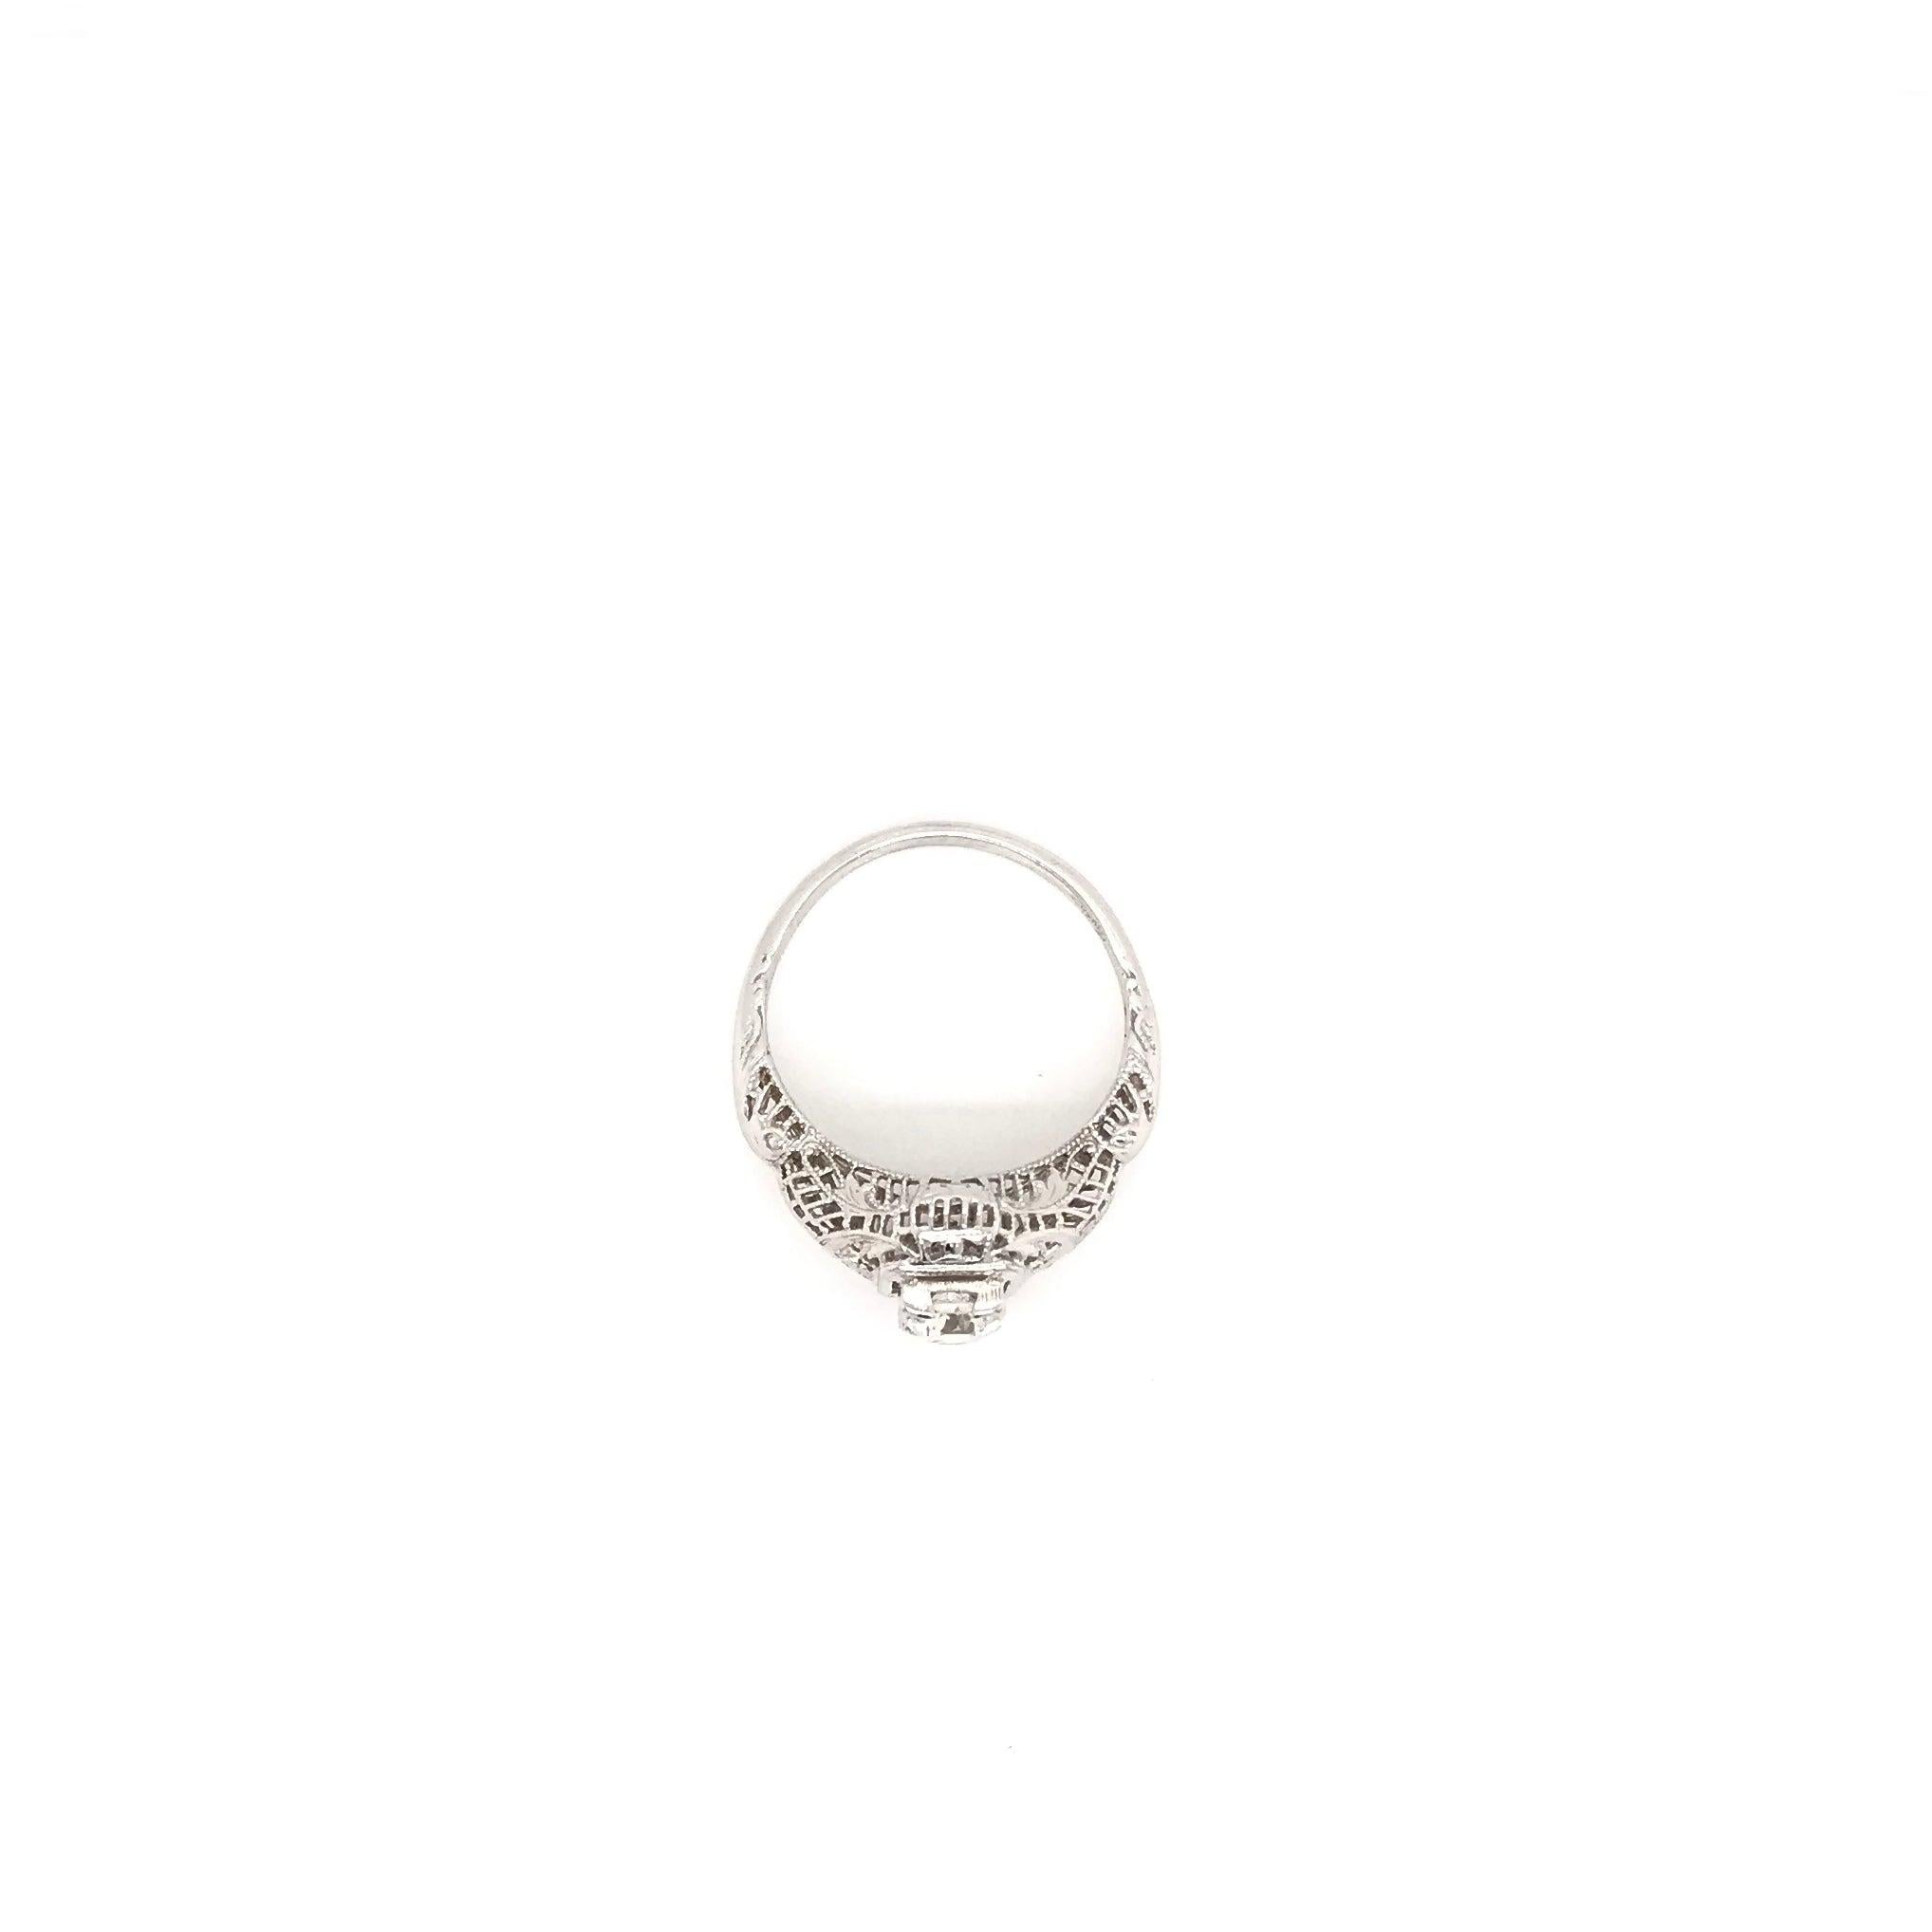 Antique Art Deco Filigree Solitaire Style Diamond Ring For Sale 3